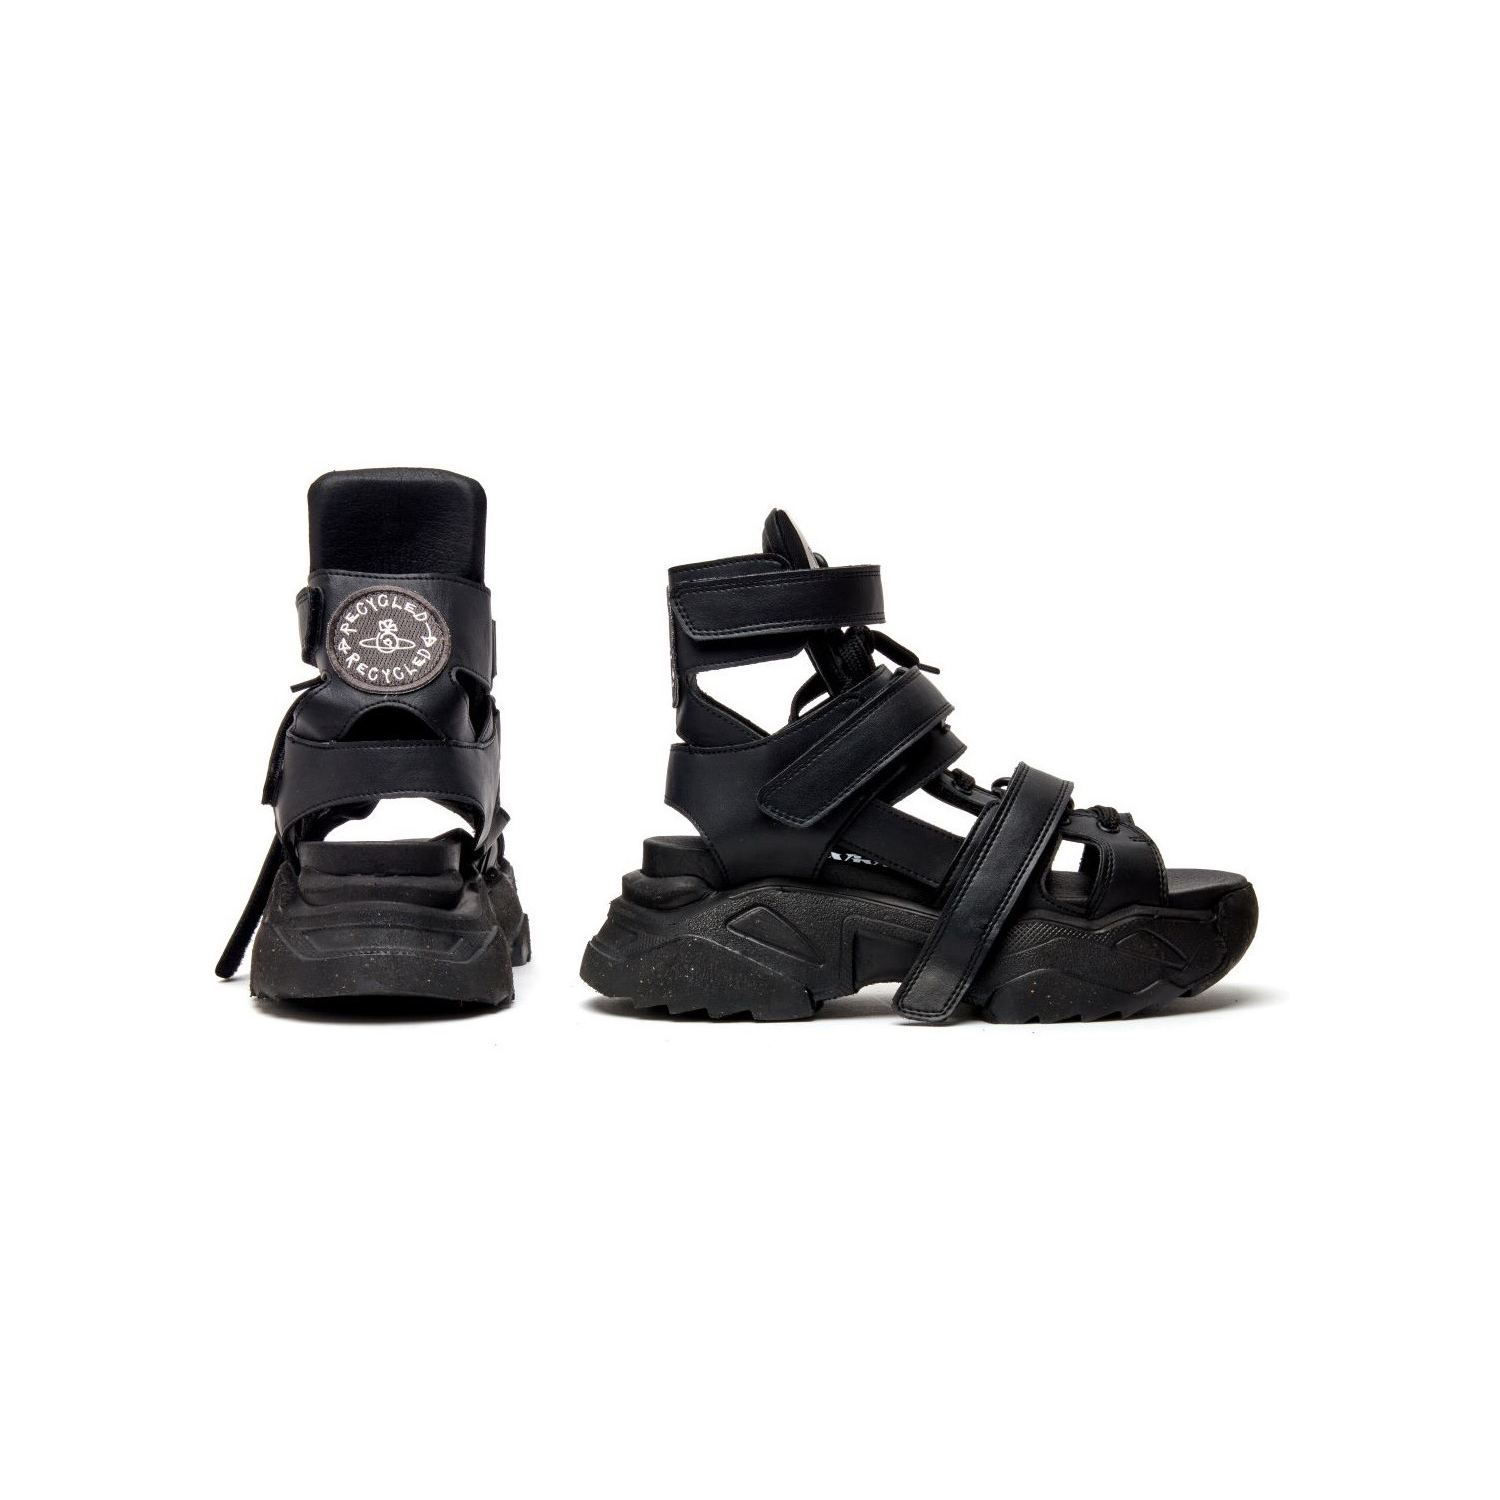 Vivienne Westwood 创新鞋履「ROMPER SANDAL」即将发售– NOWRE现客